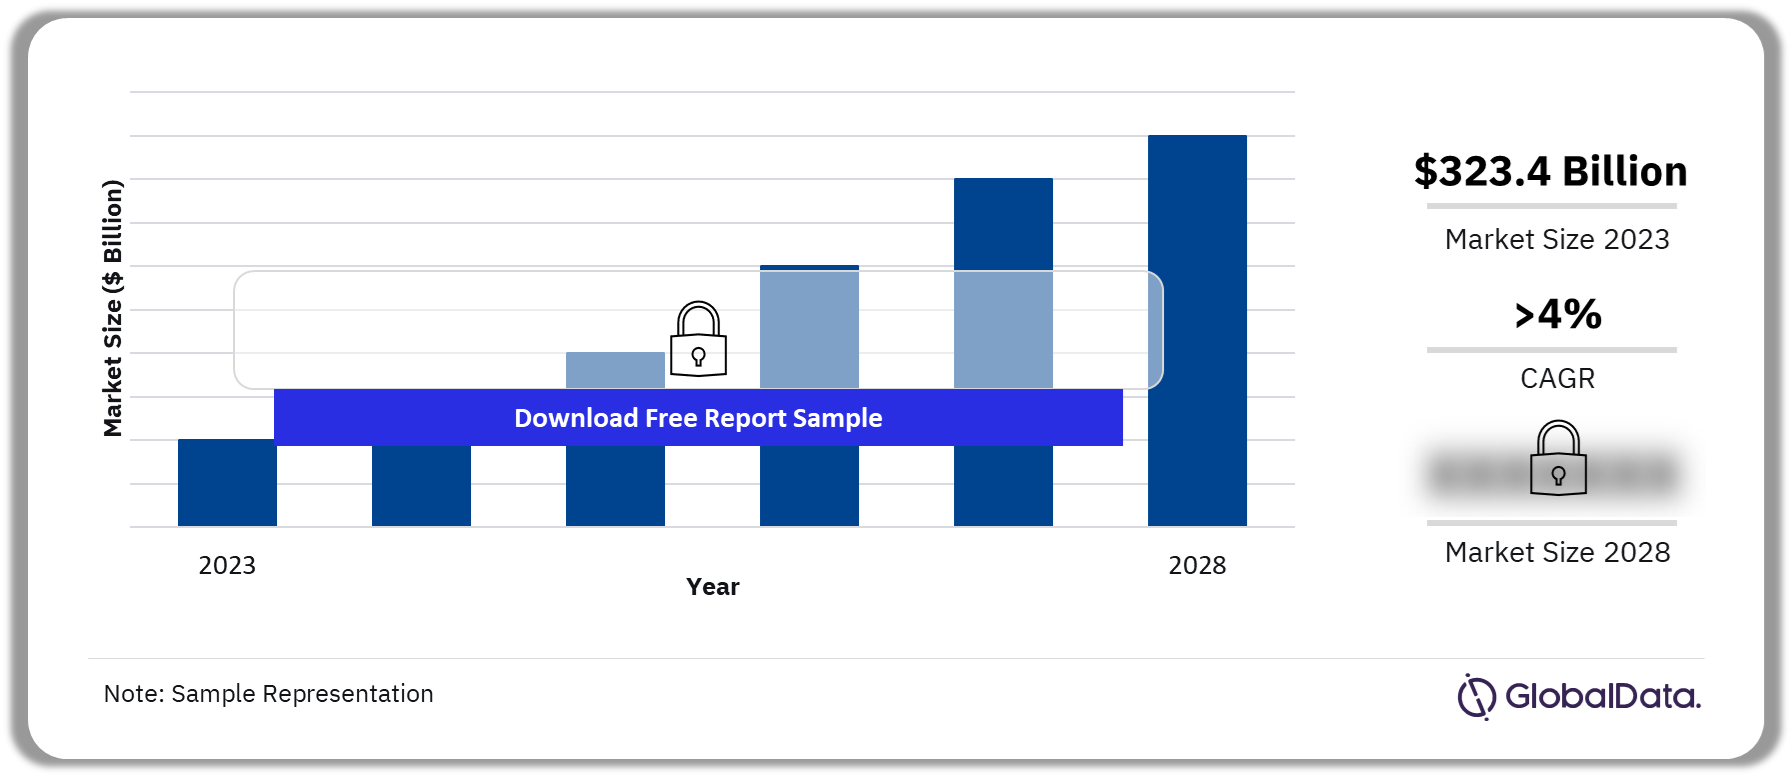 APAC Mobile Broadband Market Outlook 2023-2028 ($ Billion)